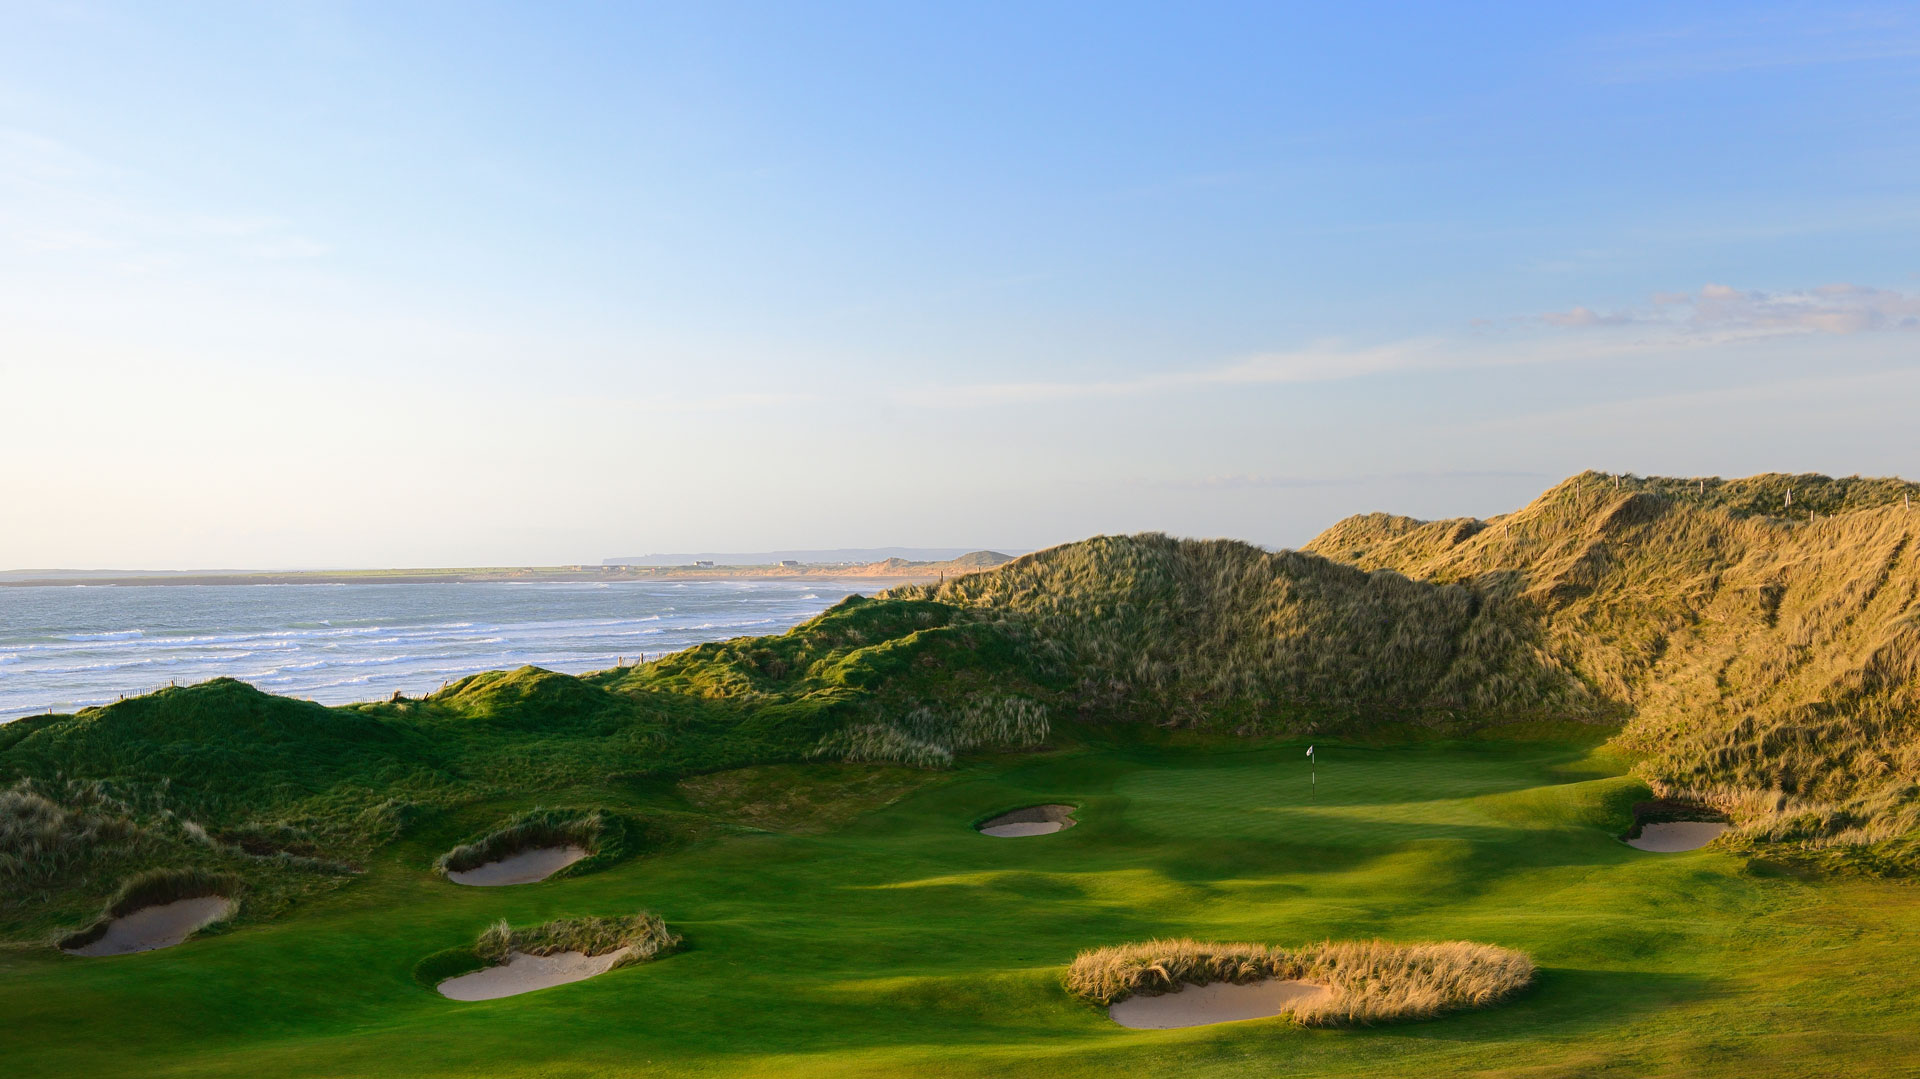 Trump International Golf Links Ireland, Doonbeg